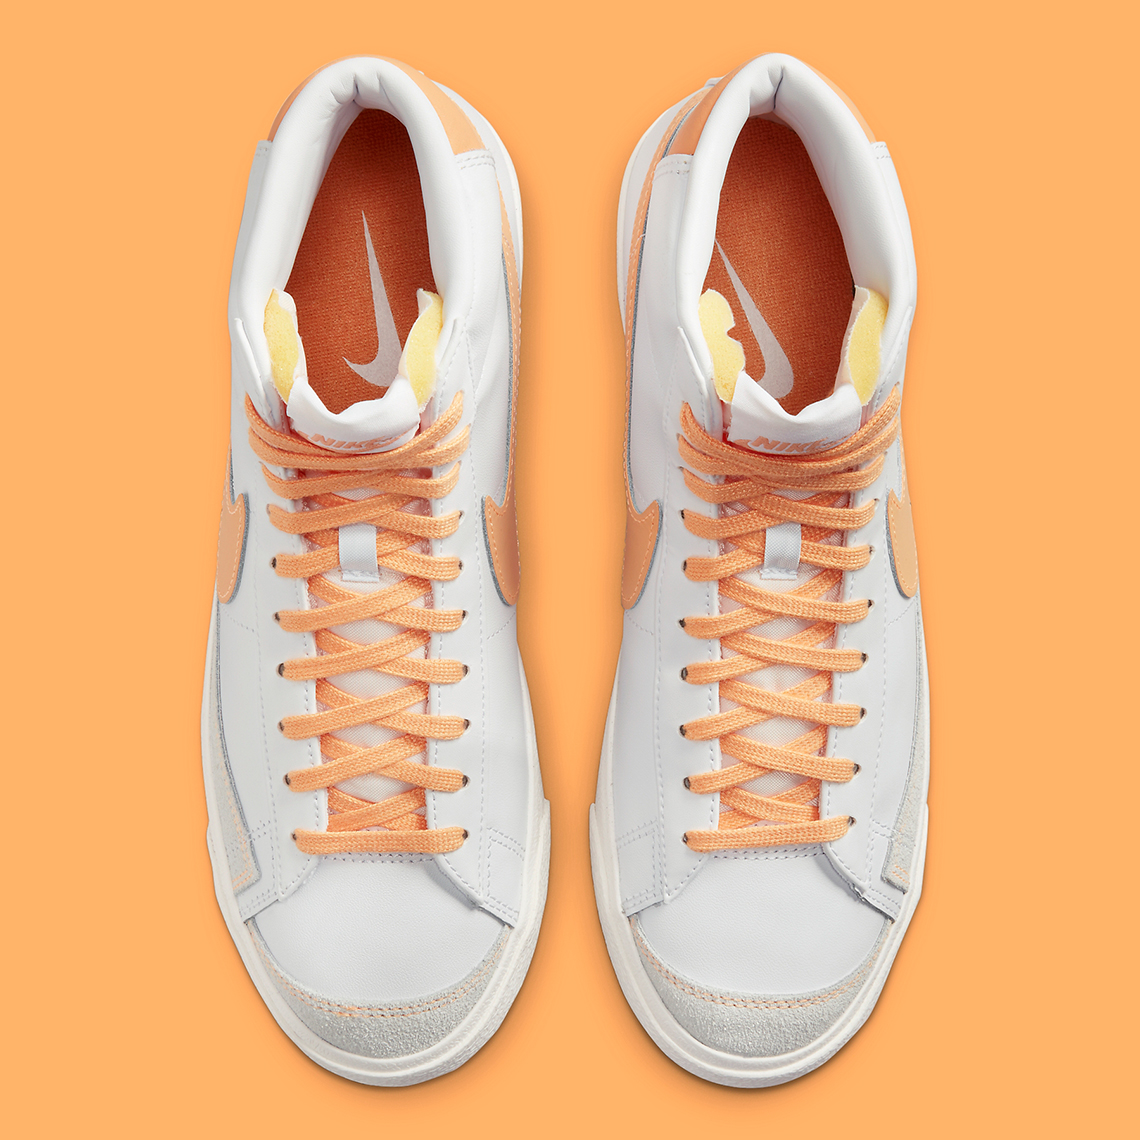 YOON Teases an Upcoming AMBUSH x Nike x Collection White Peach Fd0287 100 4